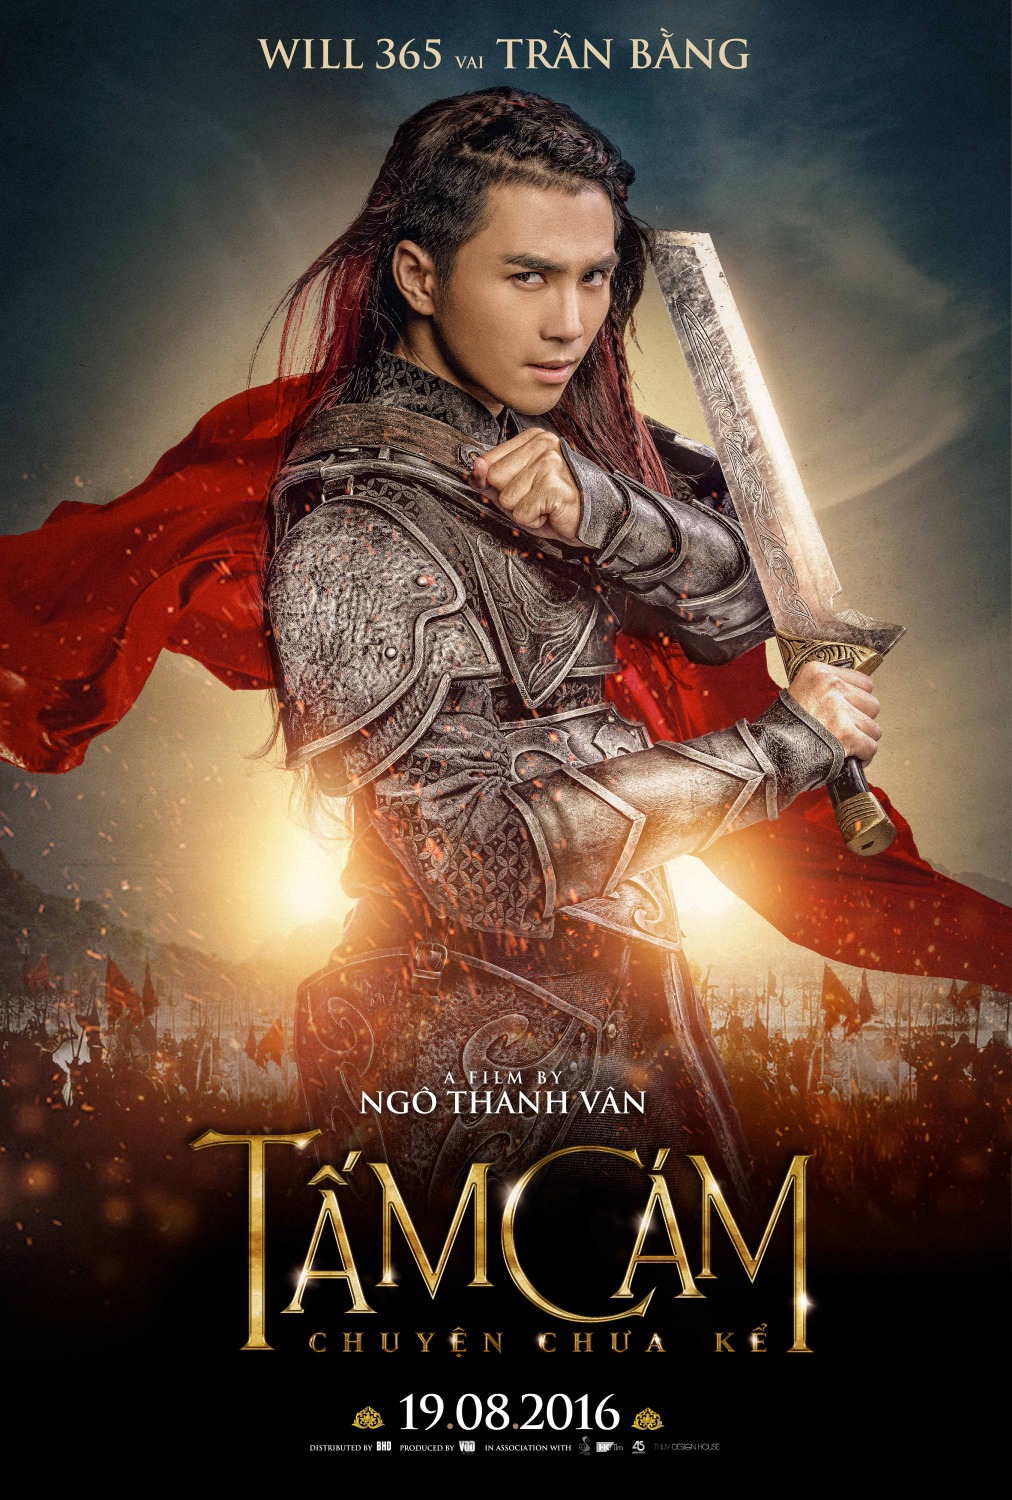 Extra Large Movie Poster Image for Tam Cam: Chuyen Chua Ke (#11 of 15)